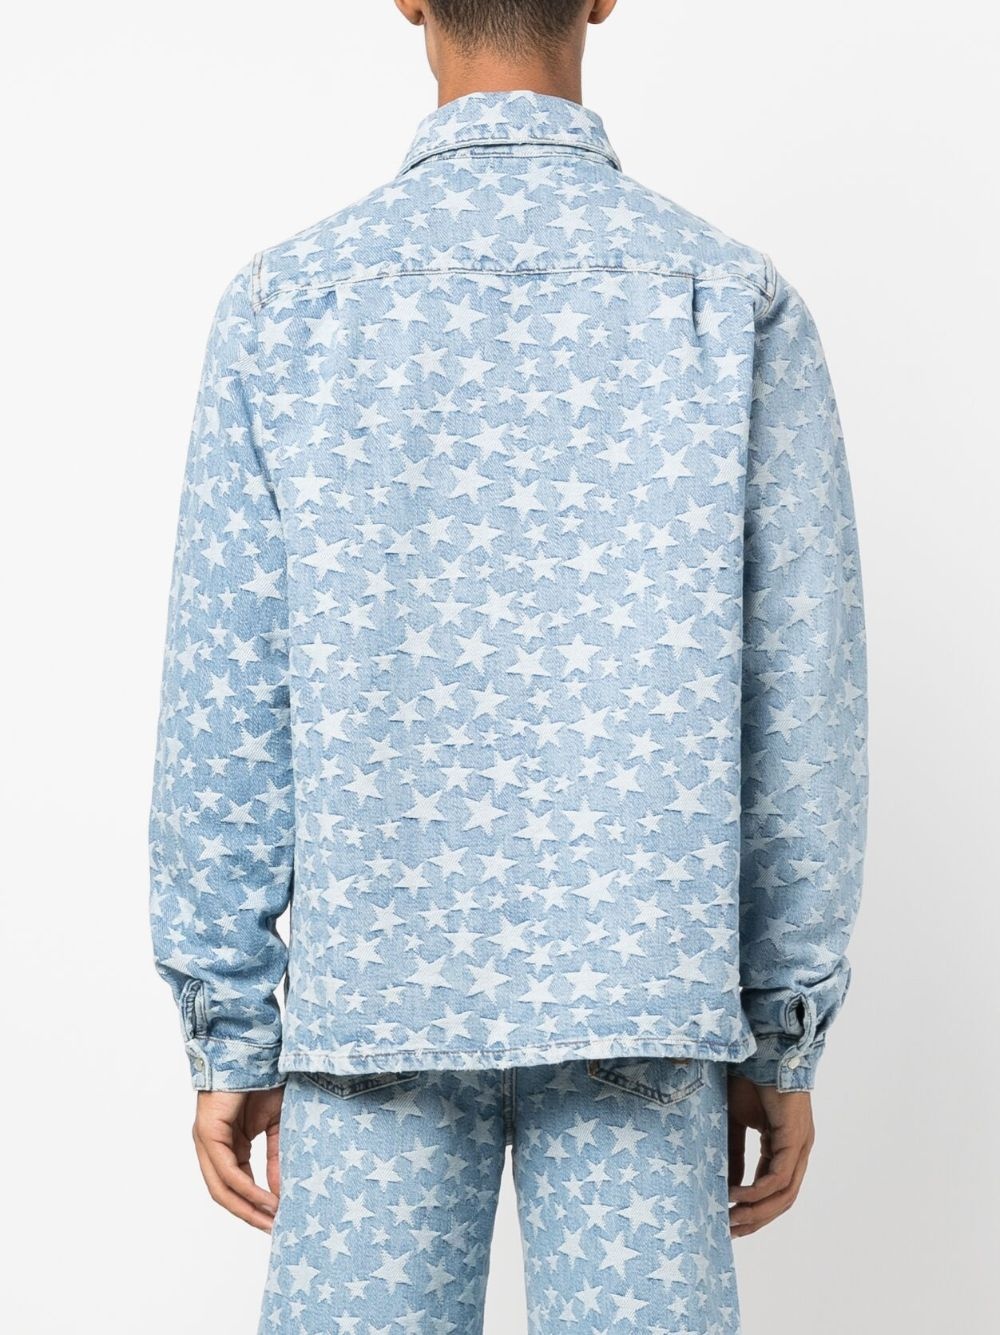 star-pattern cotton denim shirt - 5